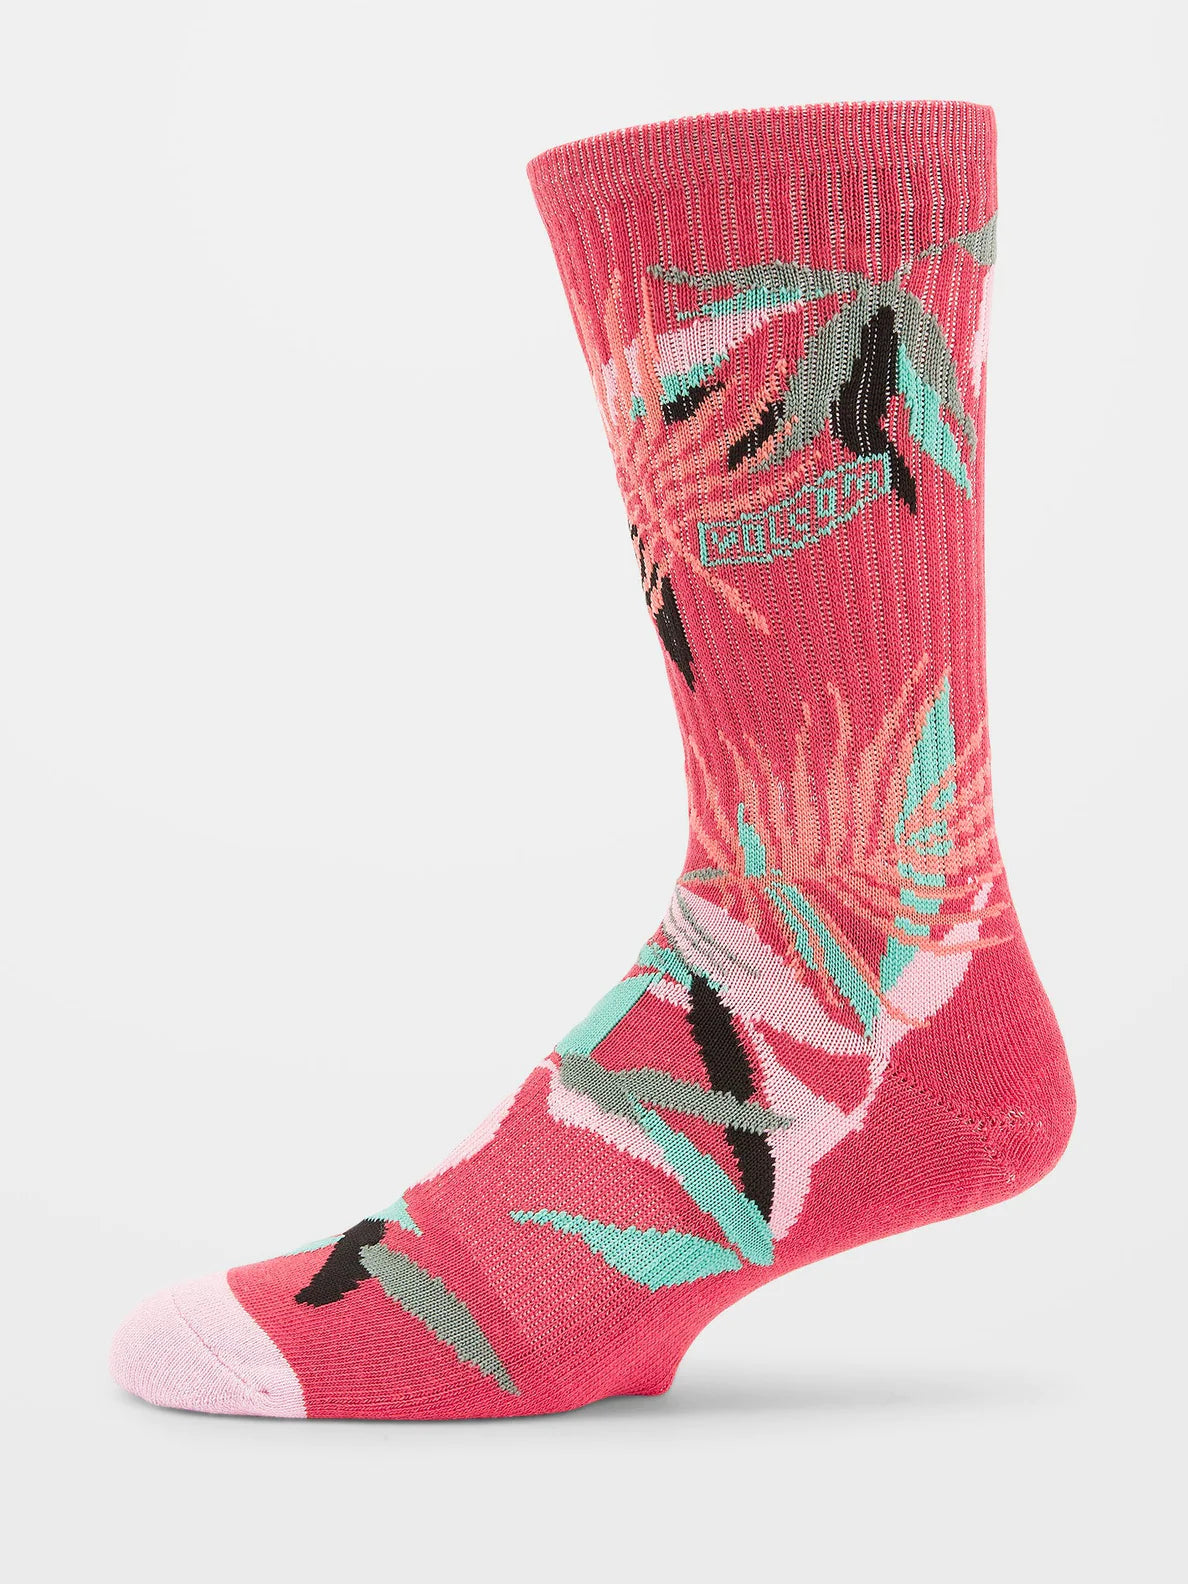 Volcom Vibes Living Coral Socken | Meistverkaufte Produkte | Neue Produkte | Neueste Produkte | surfdevils.com